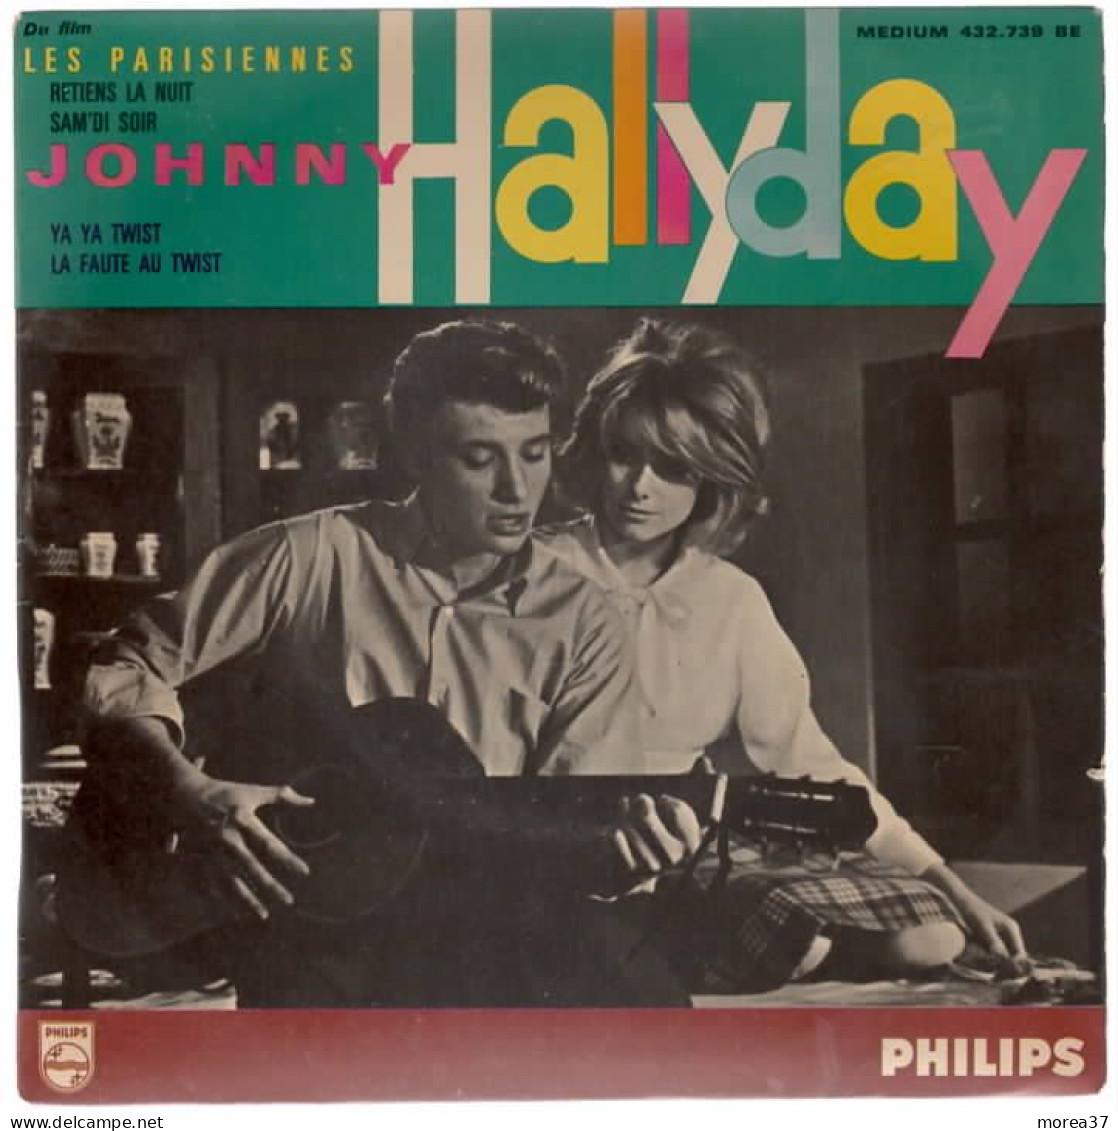 JOHNNY HALLYDAY  Retiens La Nuit    Du Film LES PARISIENNES    PHILIPS  432 .739 BE - Andere - Franstalig